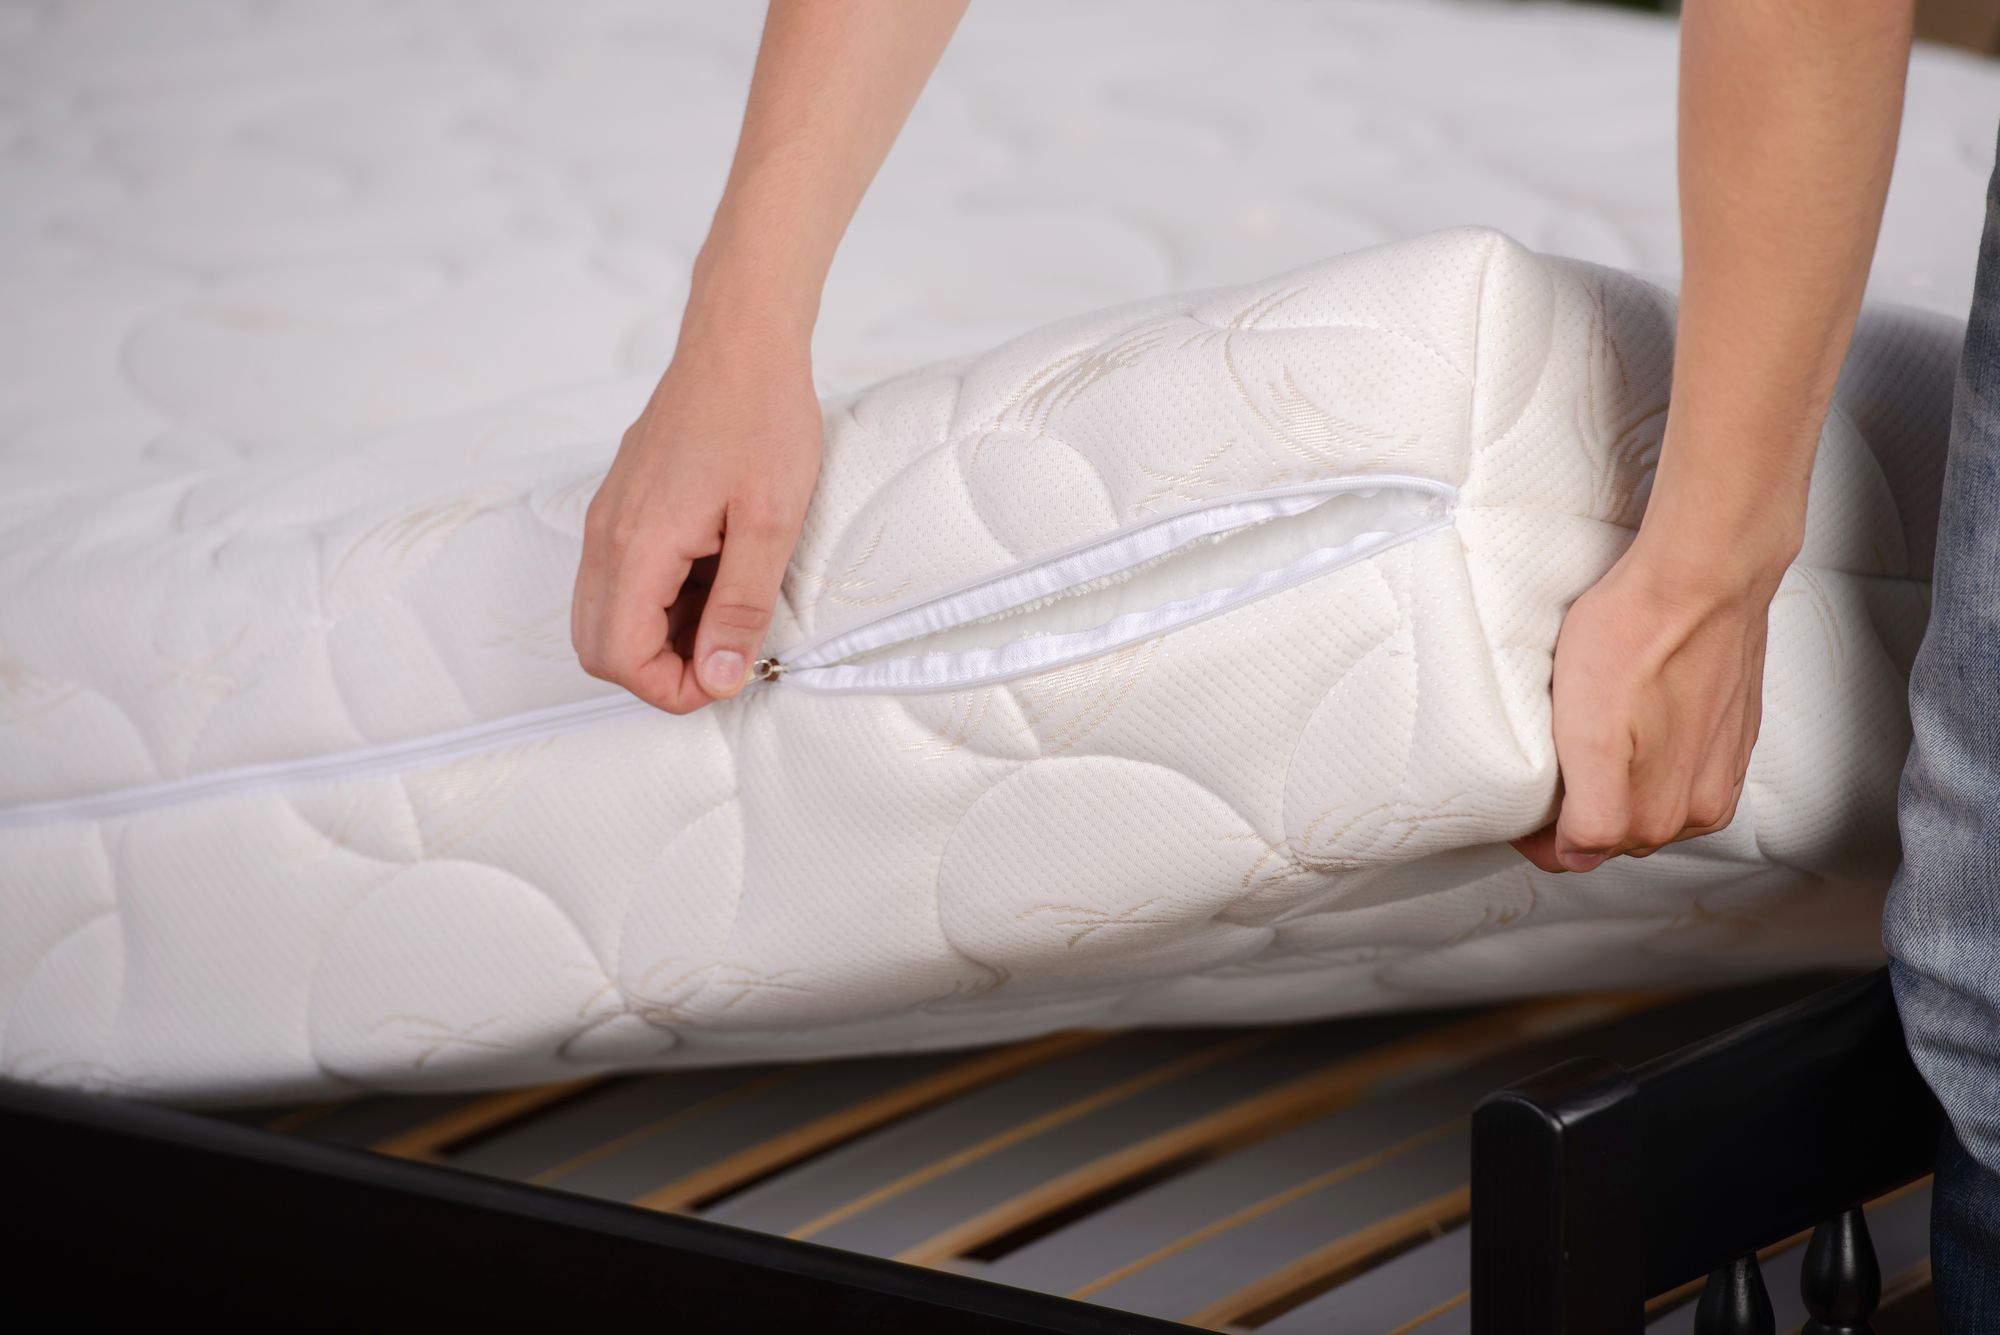 person removing mattress cover